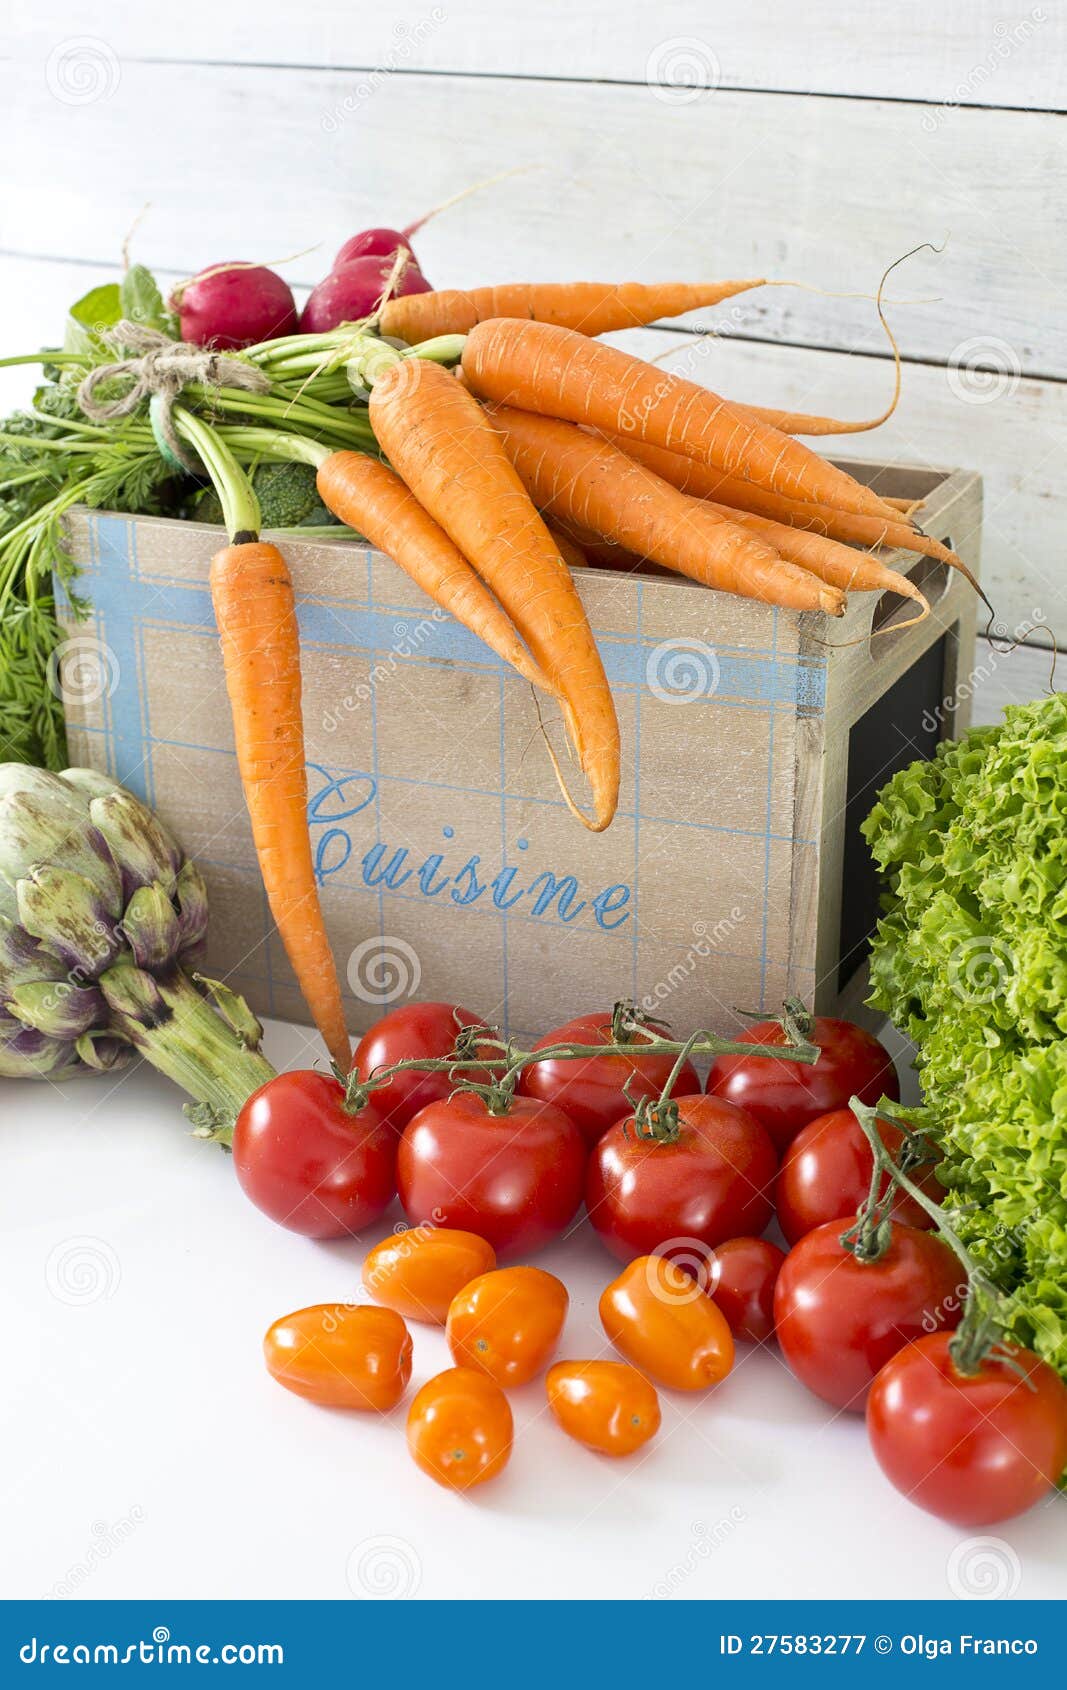 Fresh Farmers Market Vegetables Stock Image - Image of capsicum ...